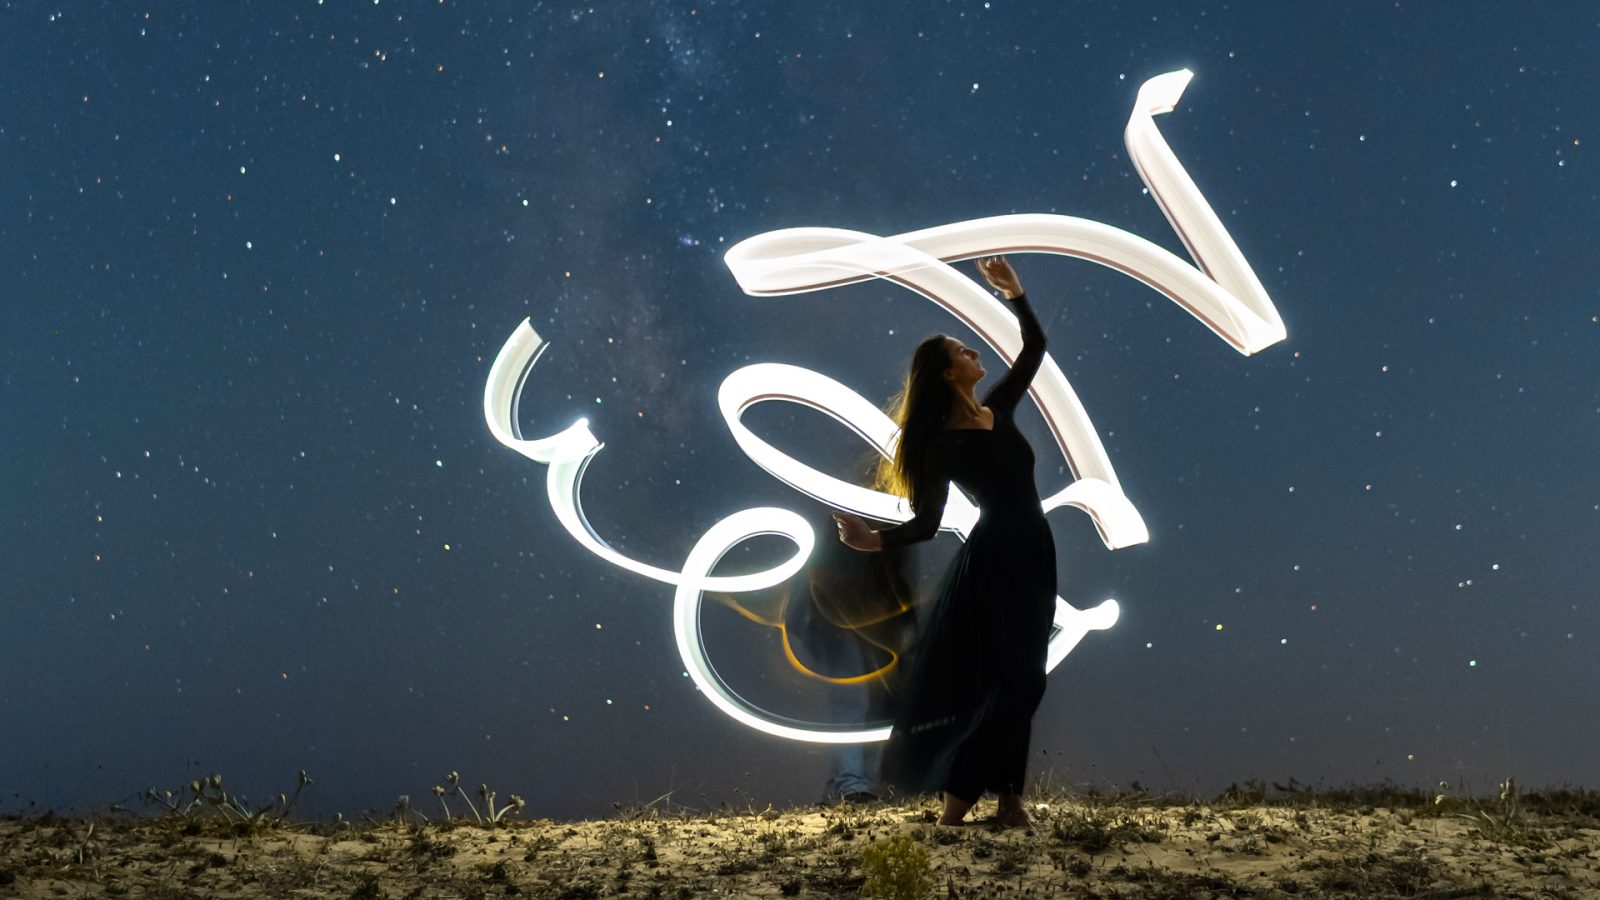 Light Painter Captures Contemporary Dancer in Stunning Photos